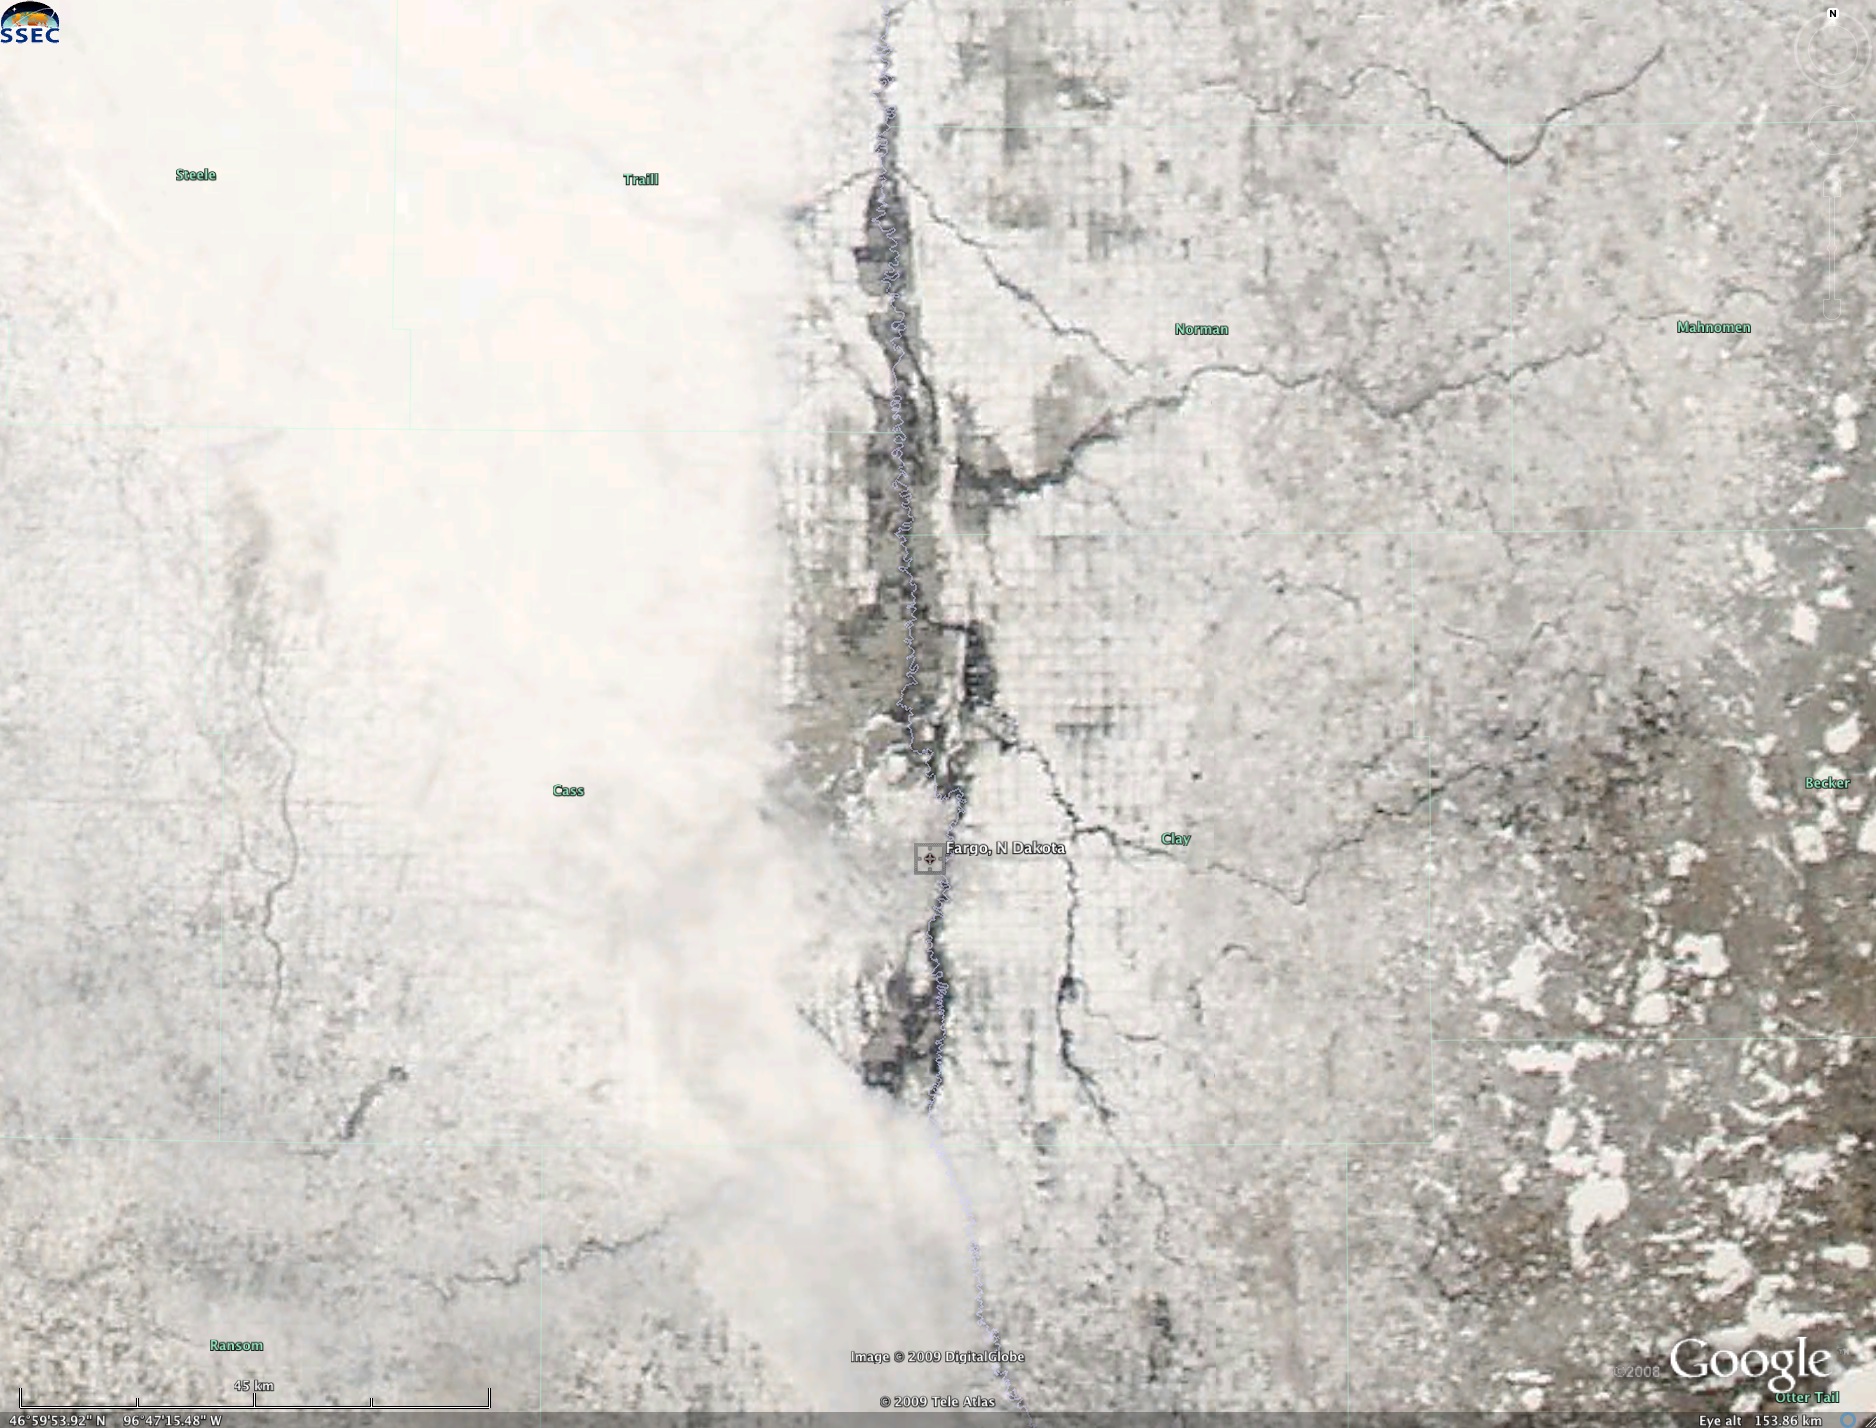 MODIS true color image (displayed using Google Earth)